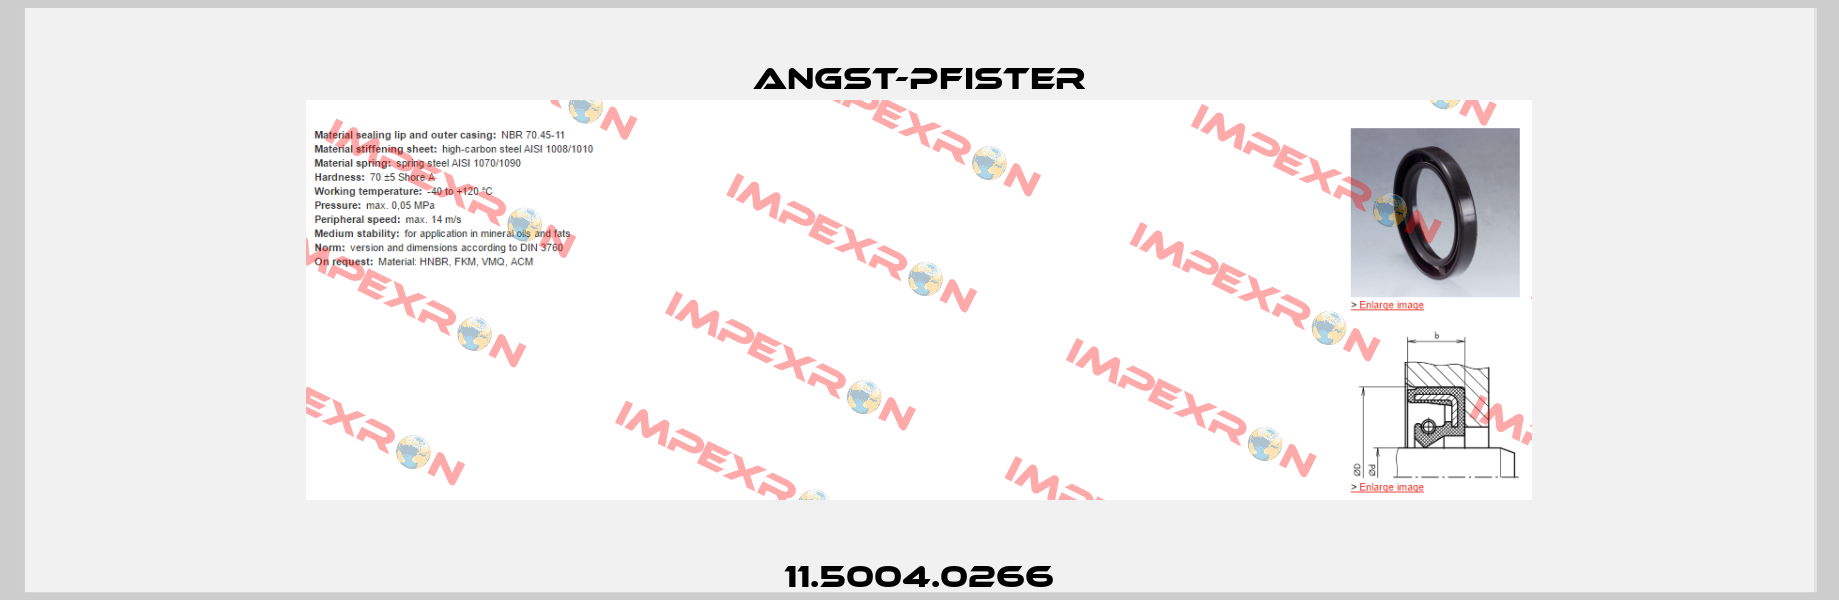 11.5004.0266 Angst-Pfister